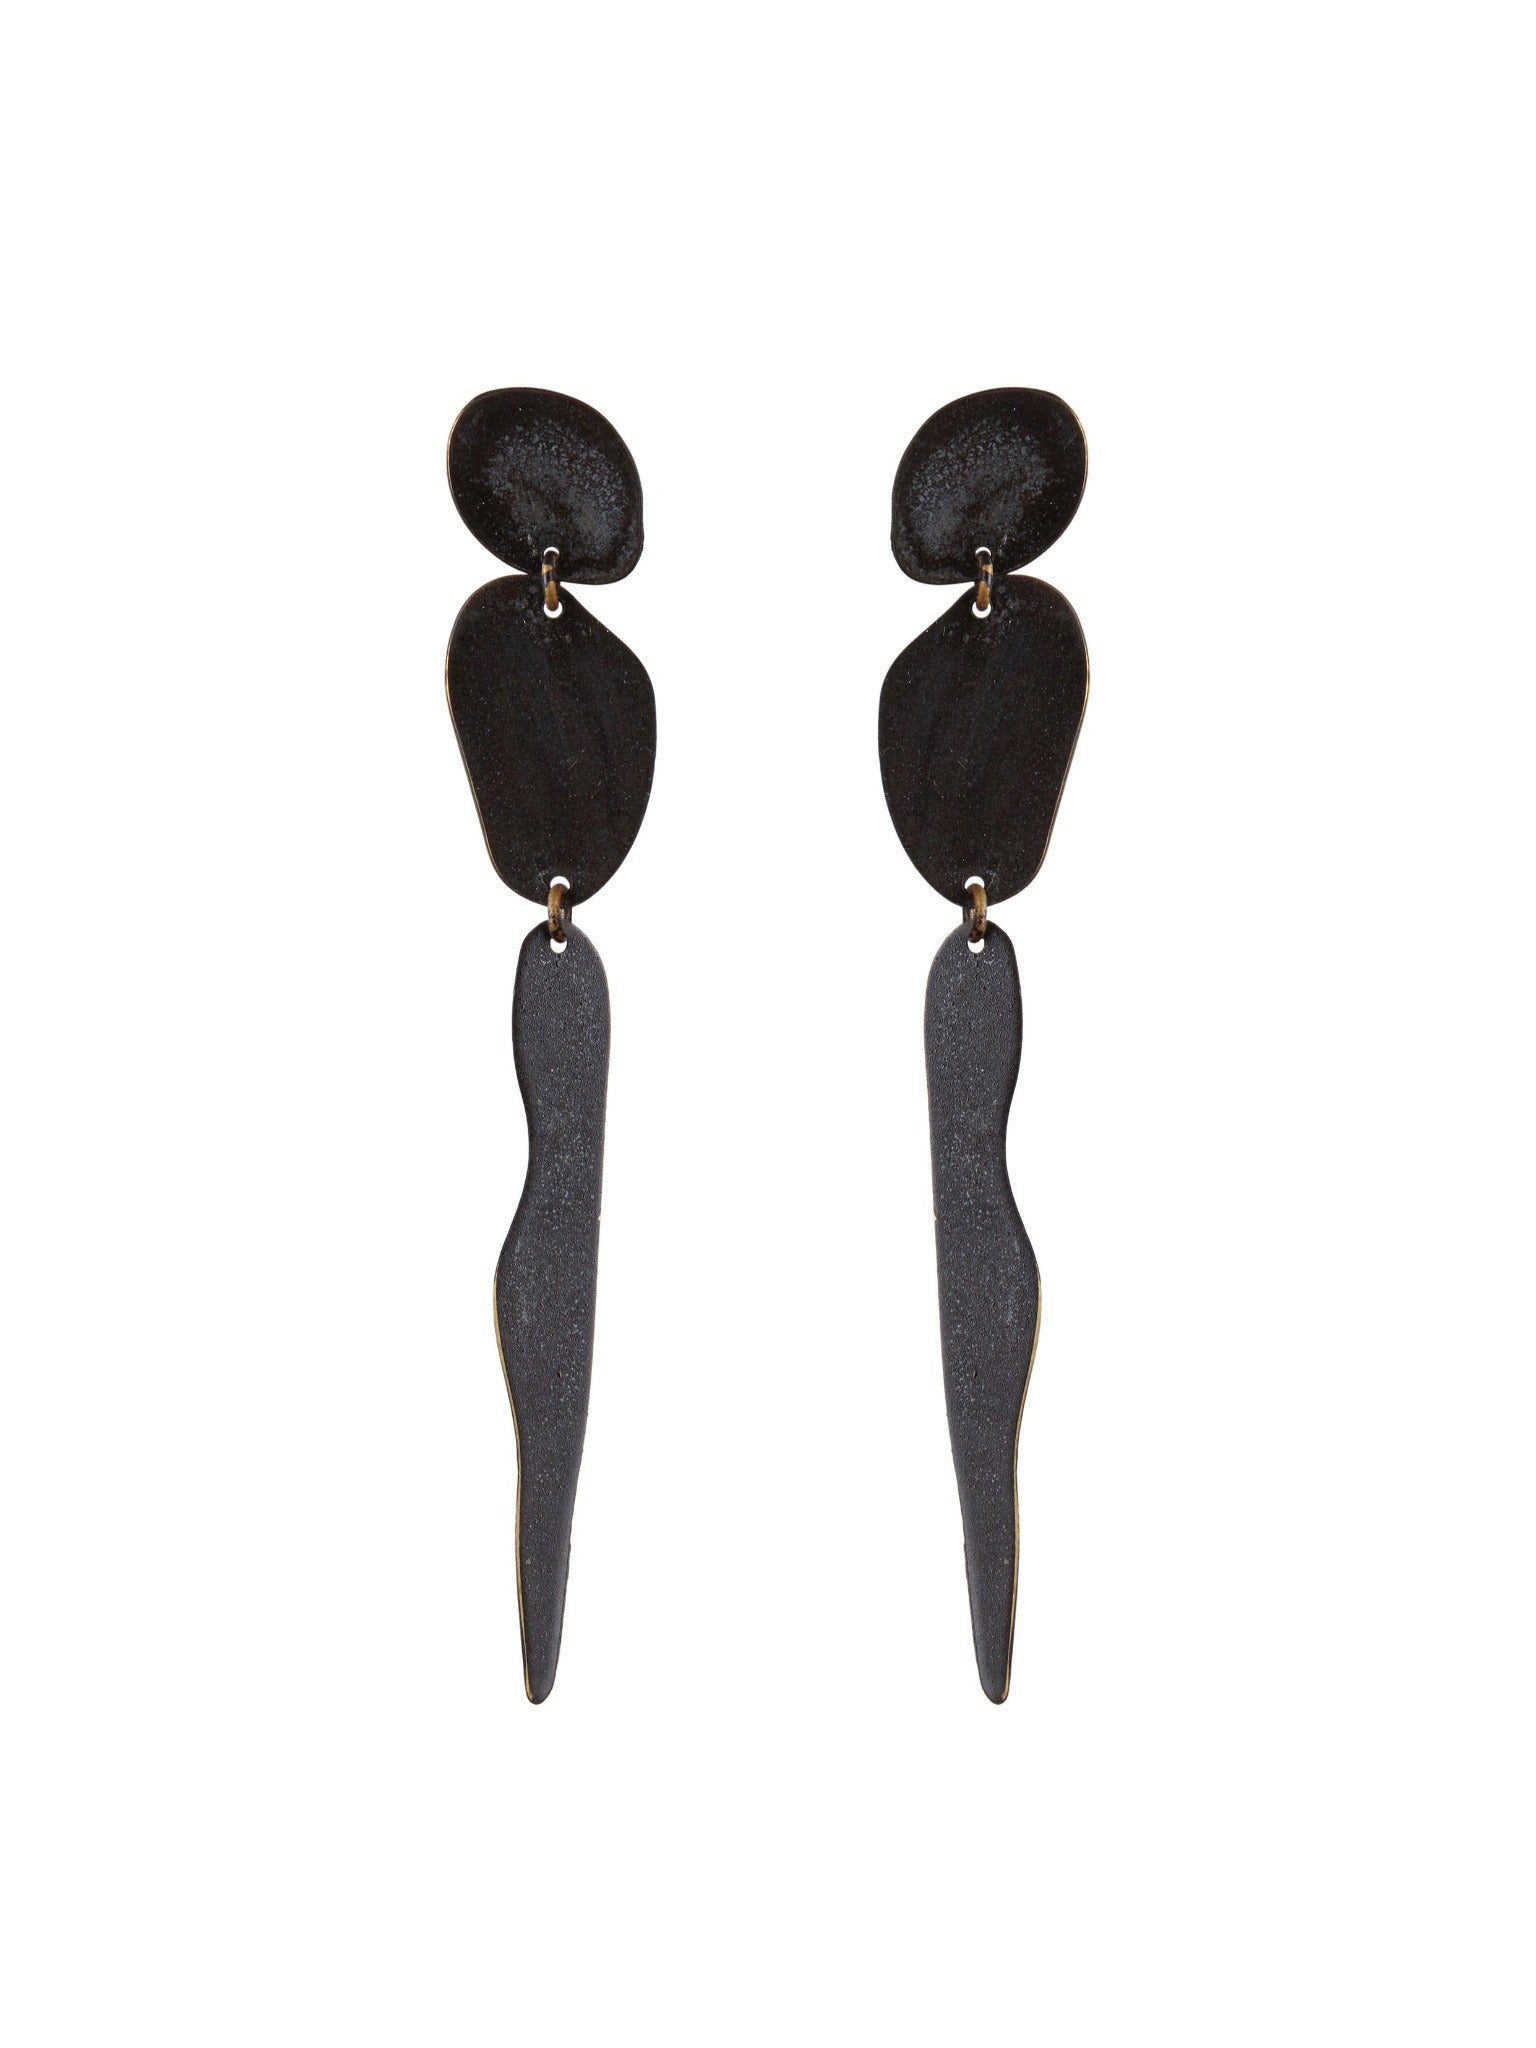 The Gia Lovers Earrings in Black